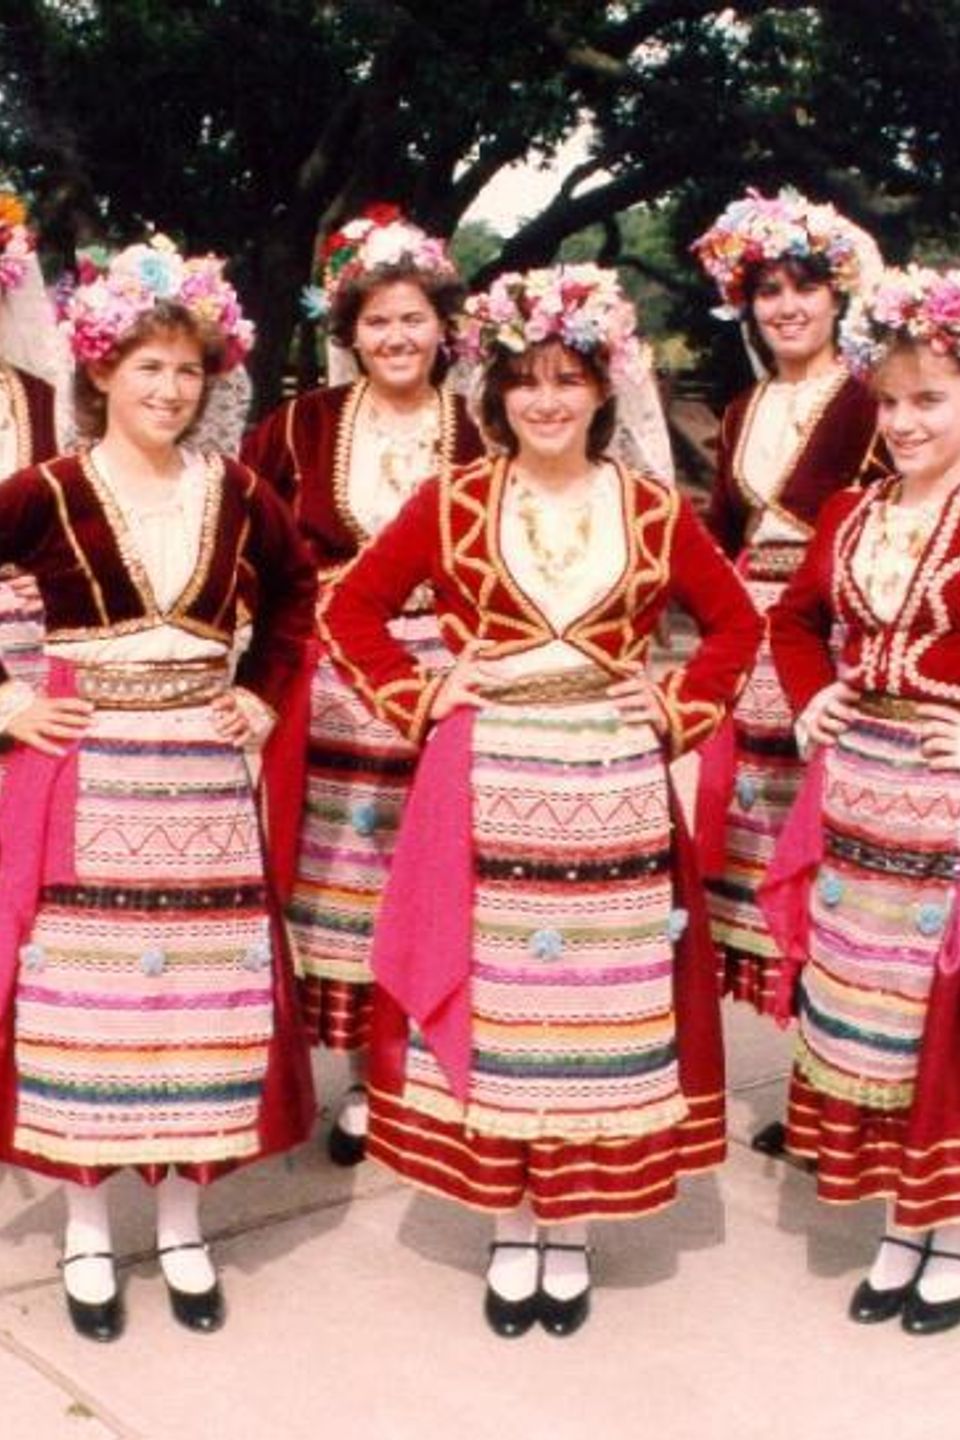 Photos 1986 girls posing in corfu costumes 377